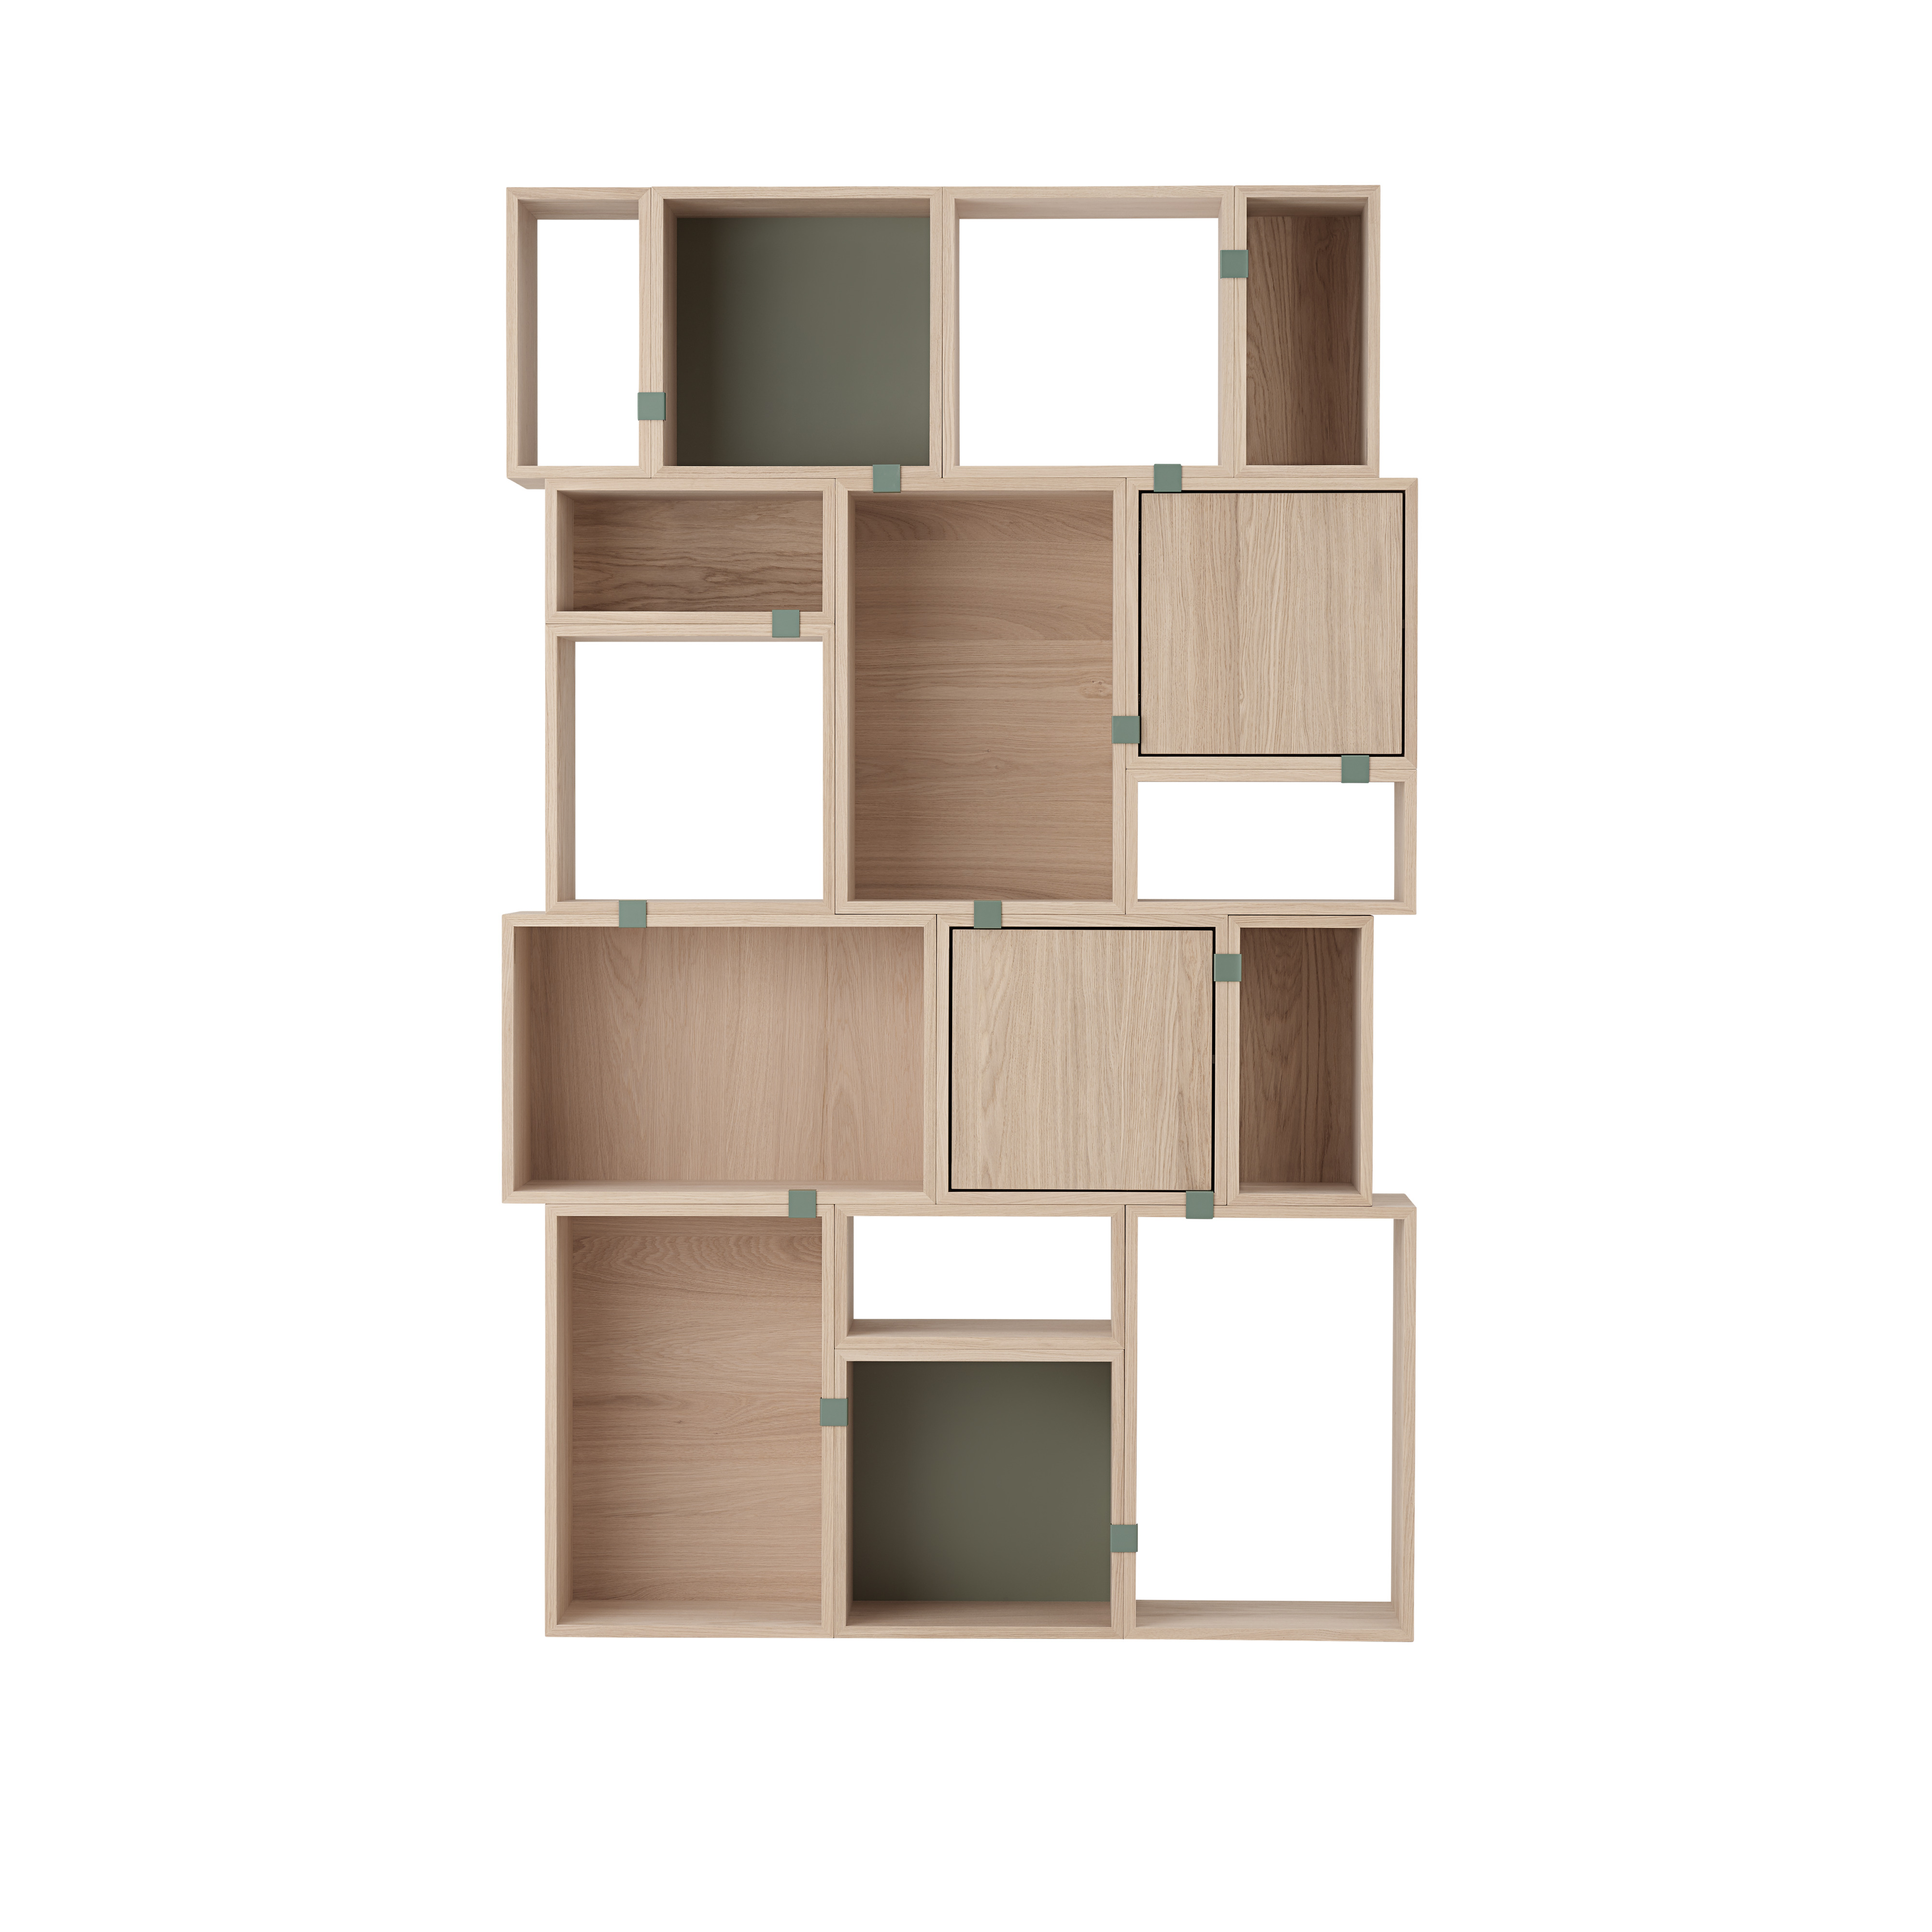 [HD] Stacking Shelf Oak Additional - 2 Shelves